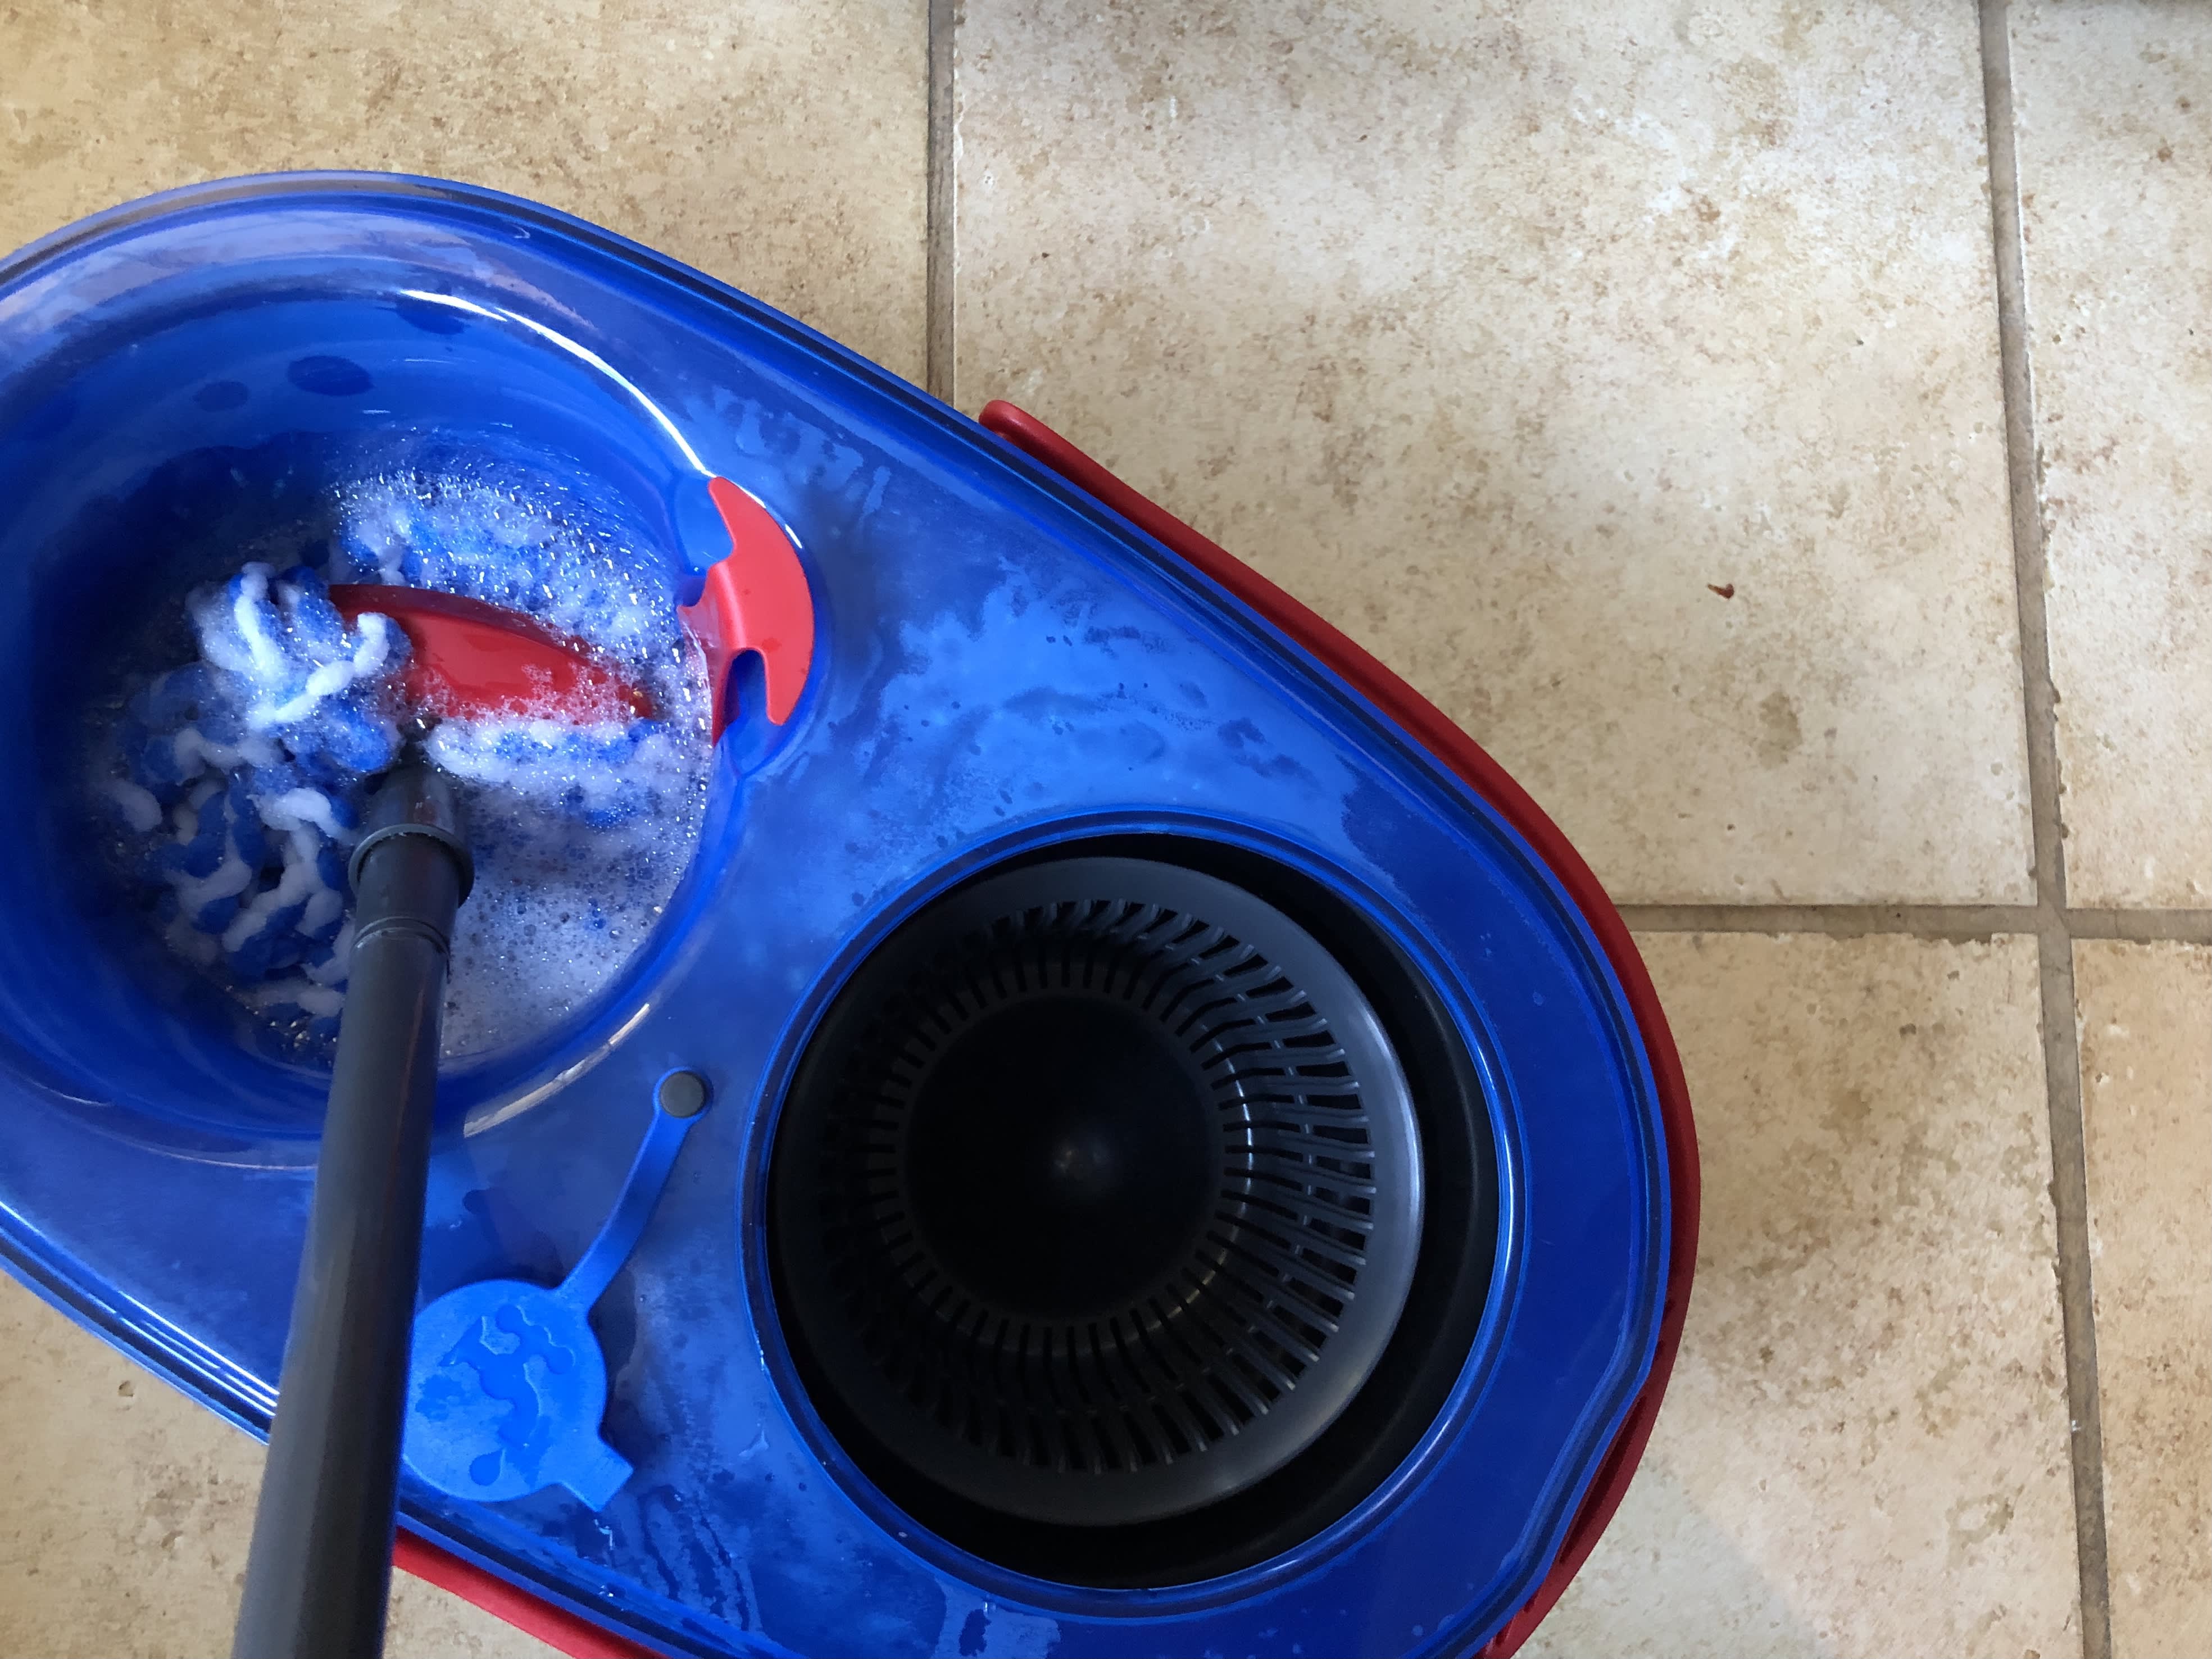 SINK N' SPIN® Quicker Dishwashing Brush, Double Sided Spin Wash Scrub Brush